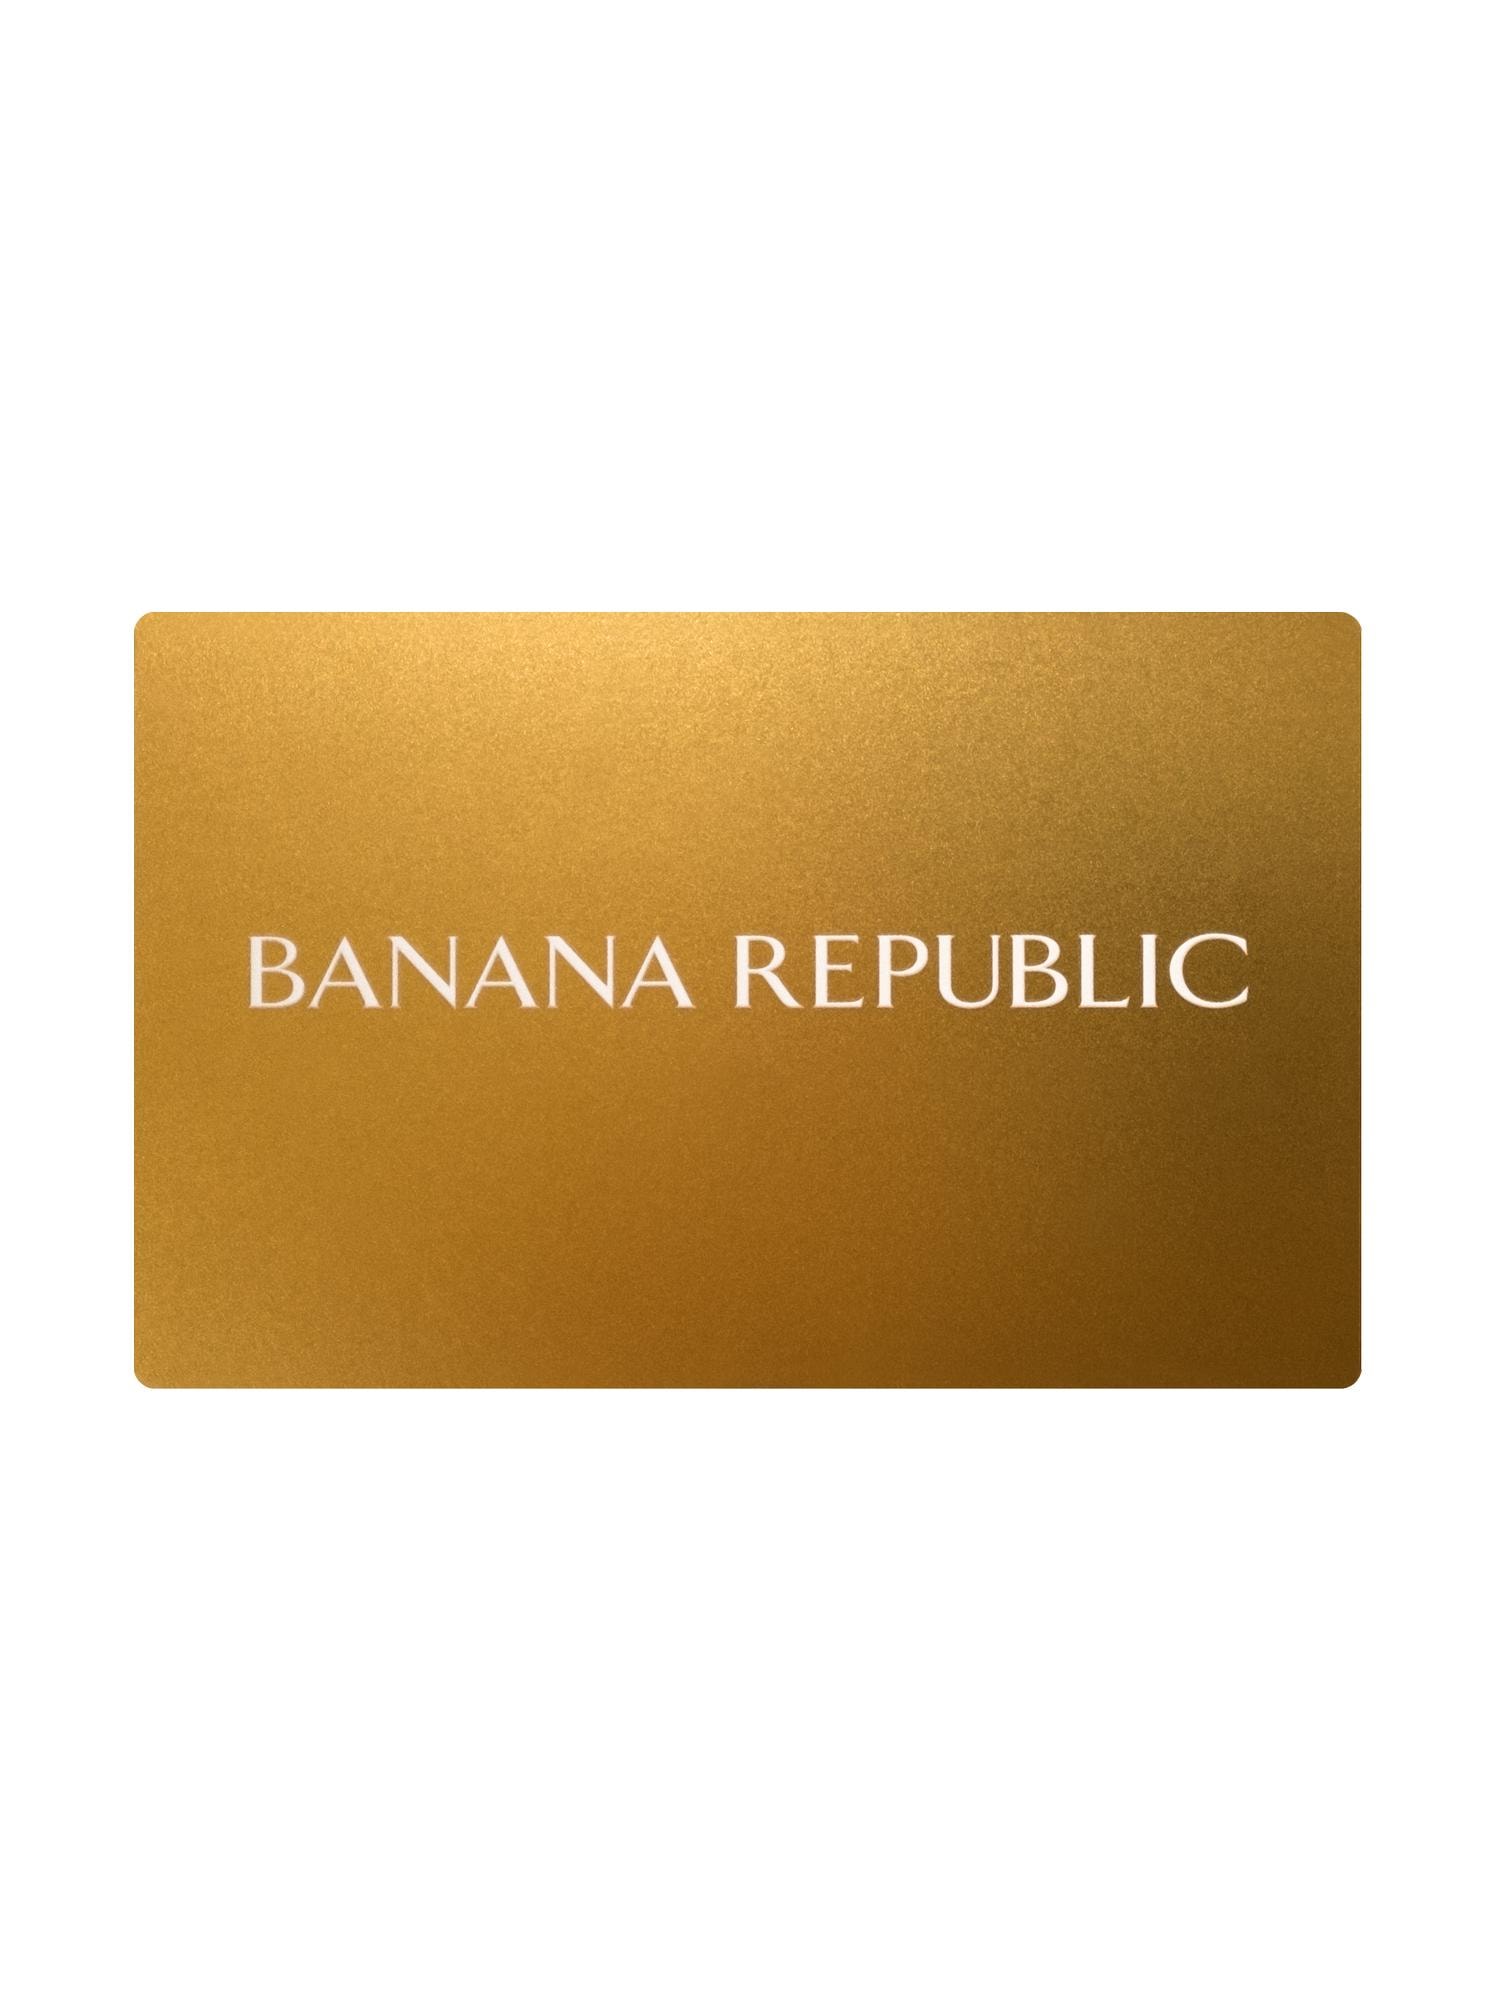 Banana Republic Giftcard | Banana Republic